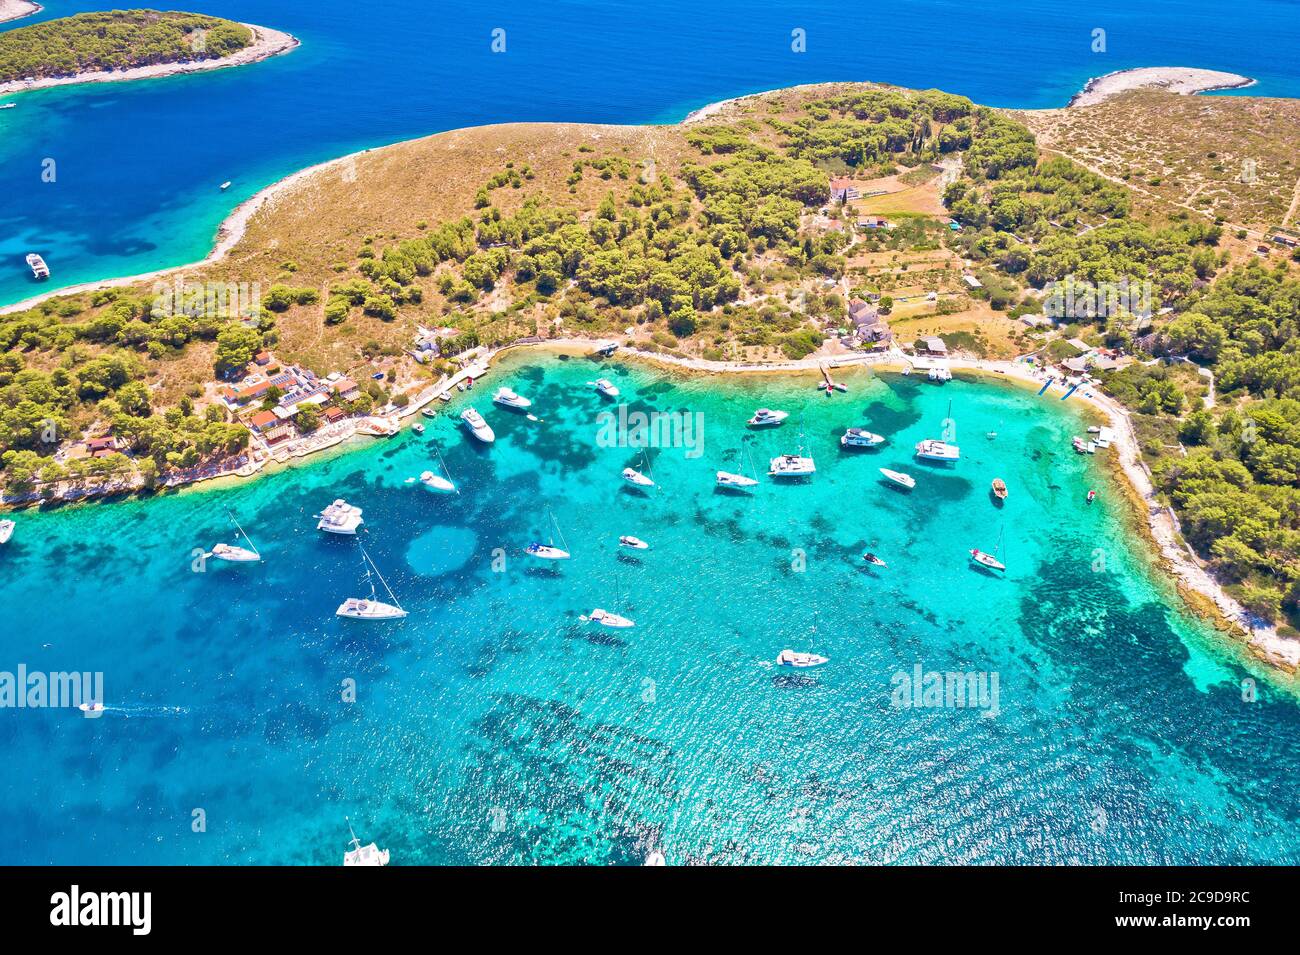 Pakleni otoci navegación destino arcipelago vista aérea, isla Hvar, Dalmacia región de Croacia Foto de stock